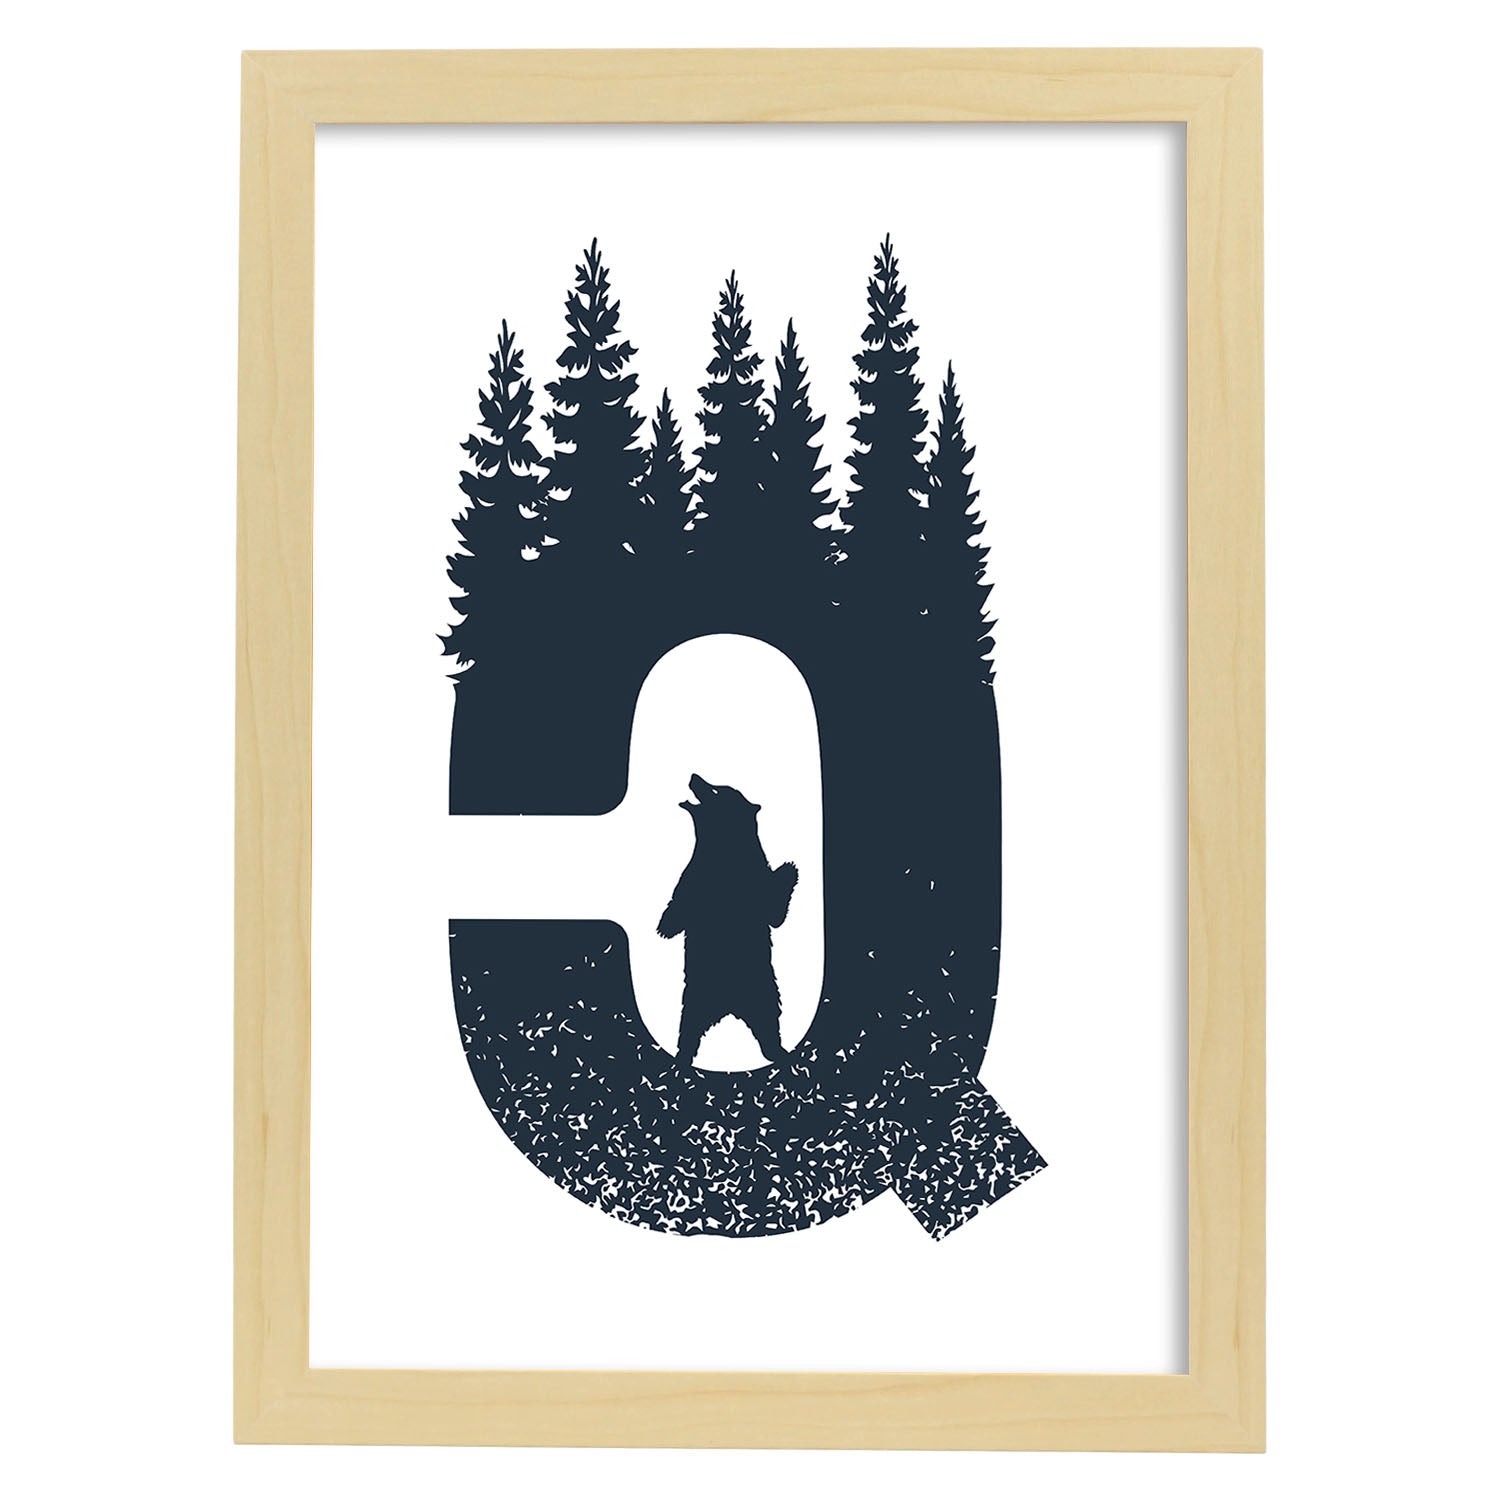 Letra Q con bosque, oso y montañas. Naturaleza.Posters de letras con diseño.-Artwork-Nacnic-A3-Marco Madera clara-Nacnic Estudio SL